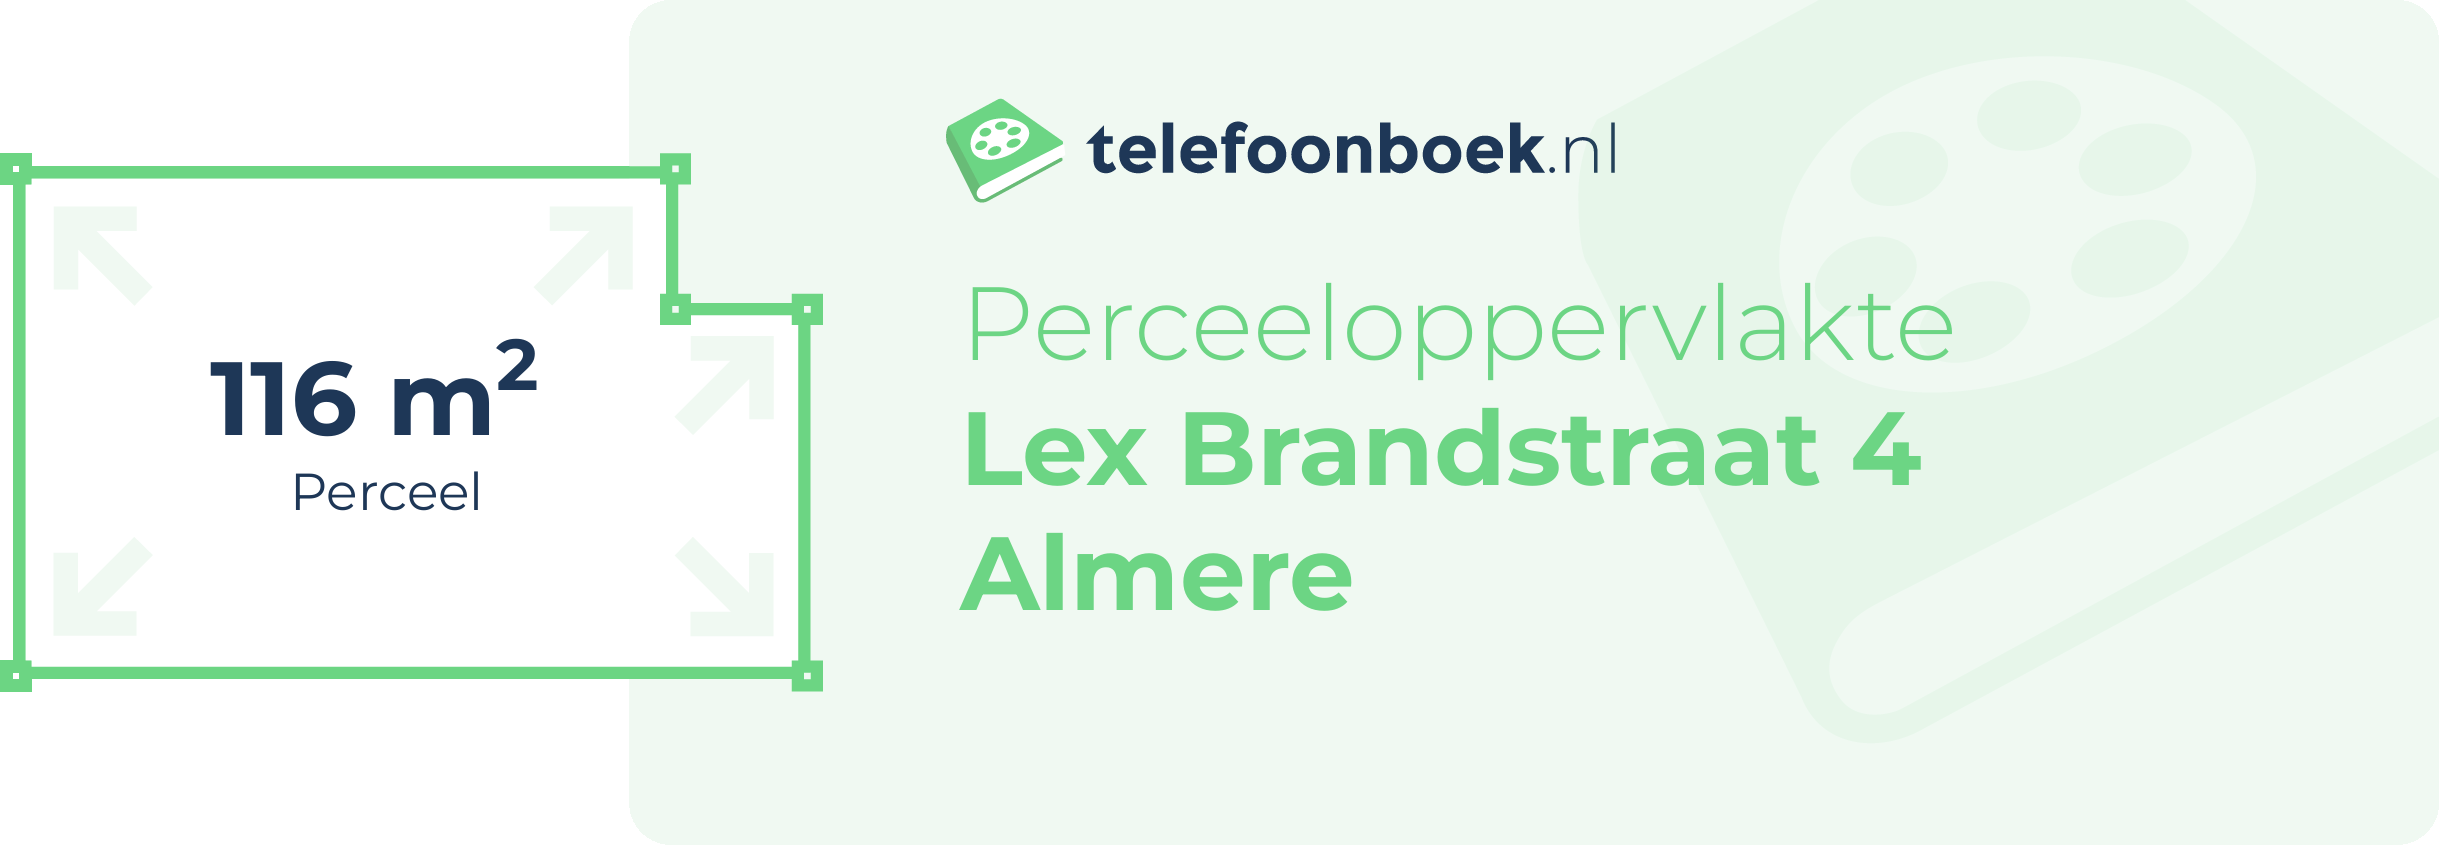 Perceeloppervlakte Lex Brandstraat 4 Almere